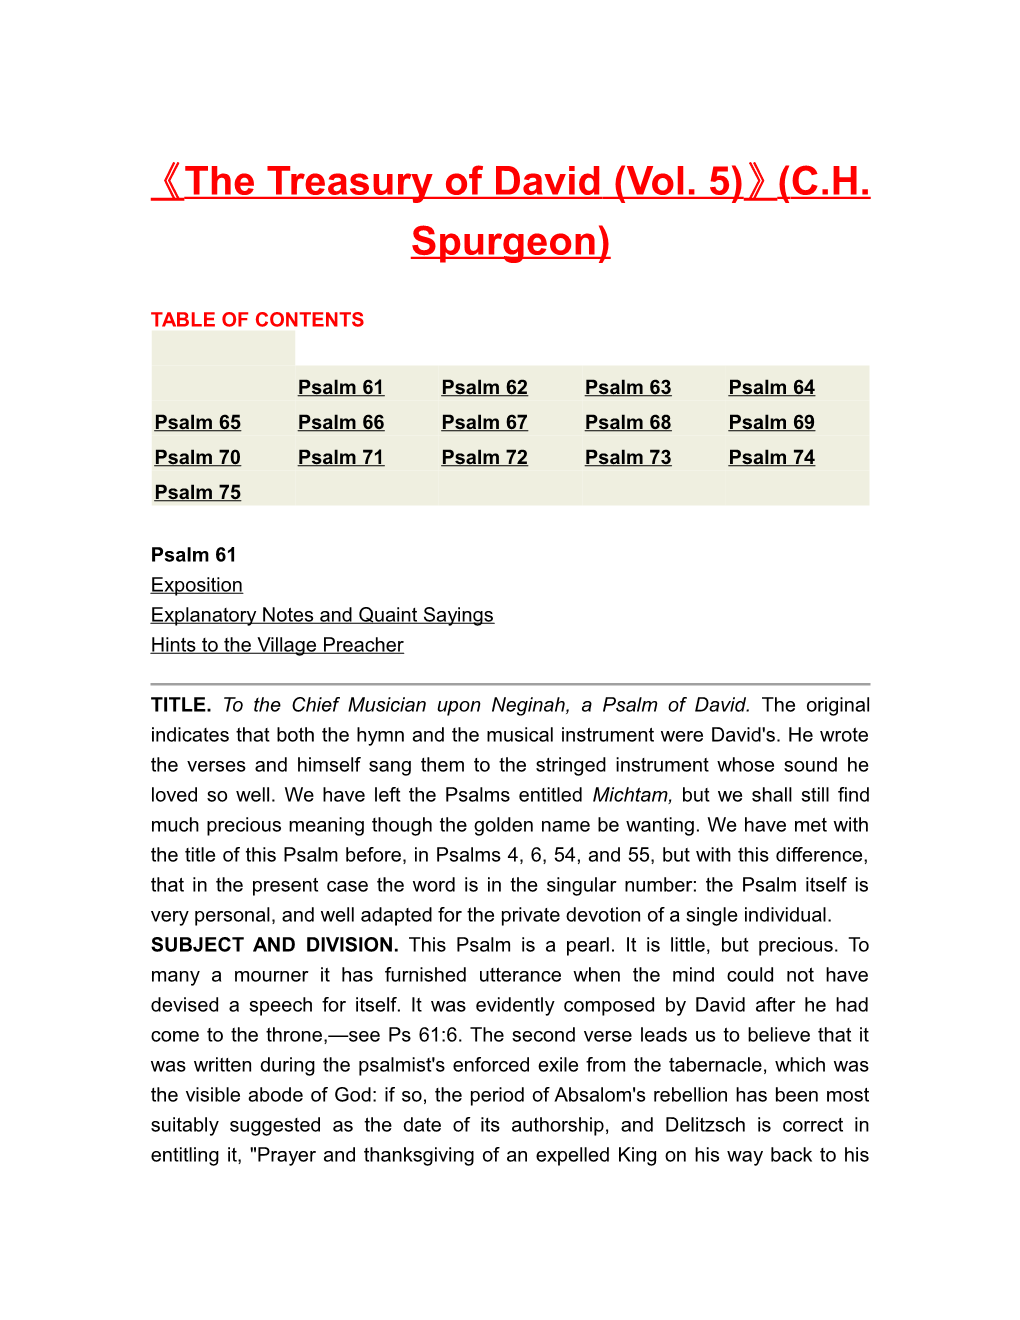 The Treasury of David (Vol. 5) (C.H. Spurgeon)